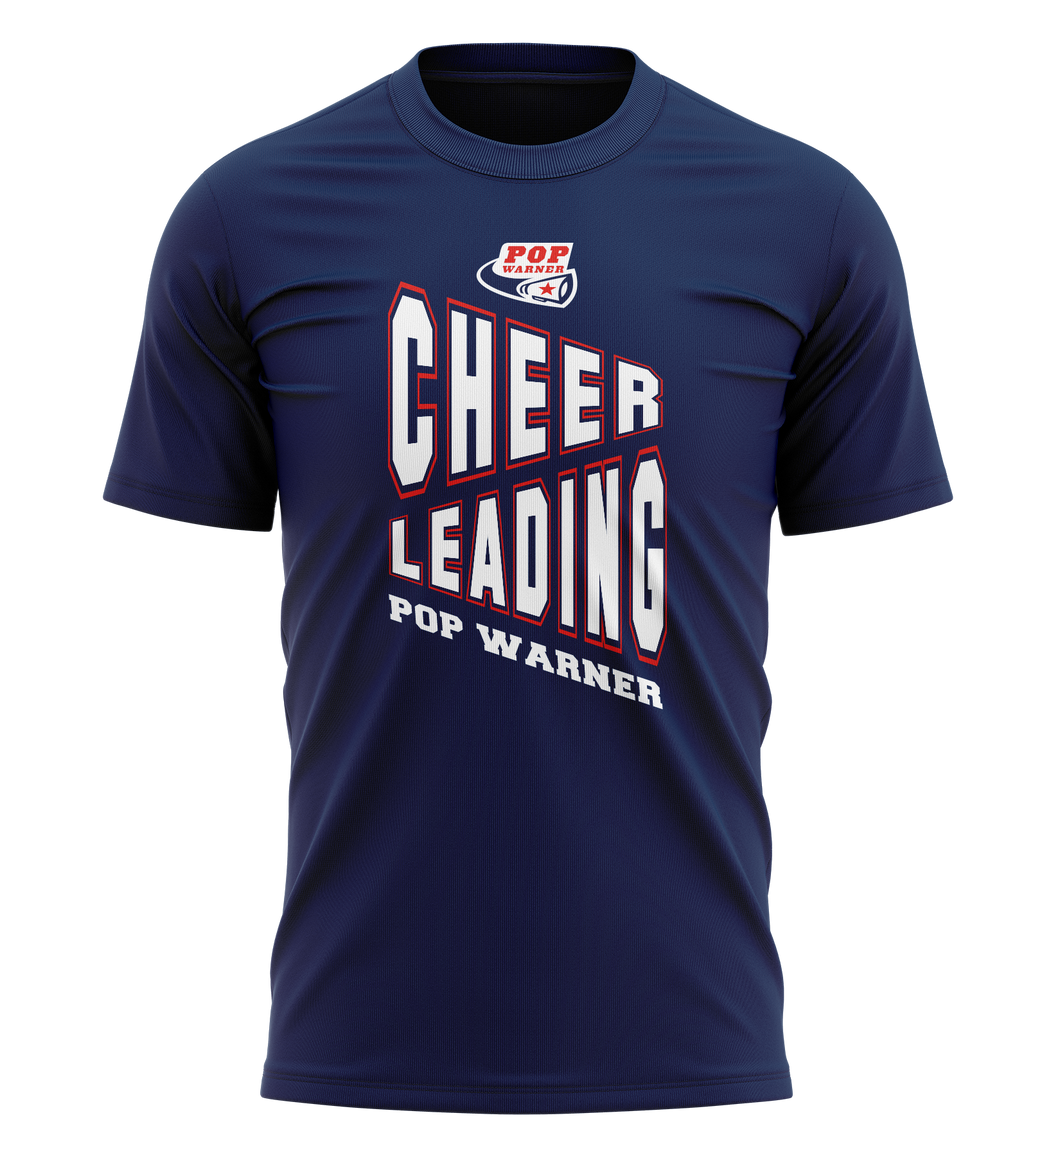 Pop Warner Cheerleading T-Shirt